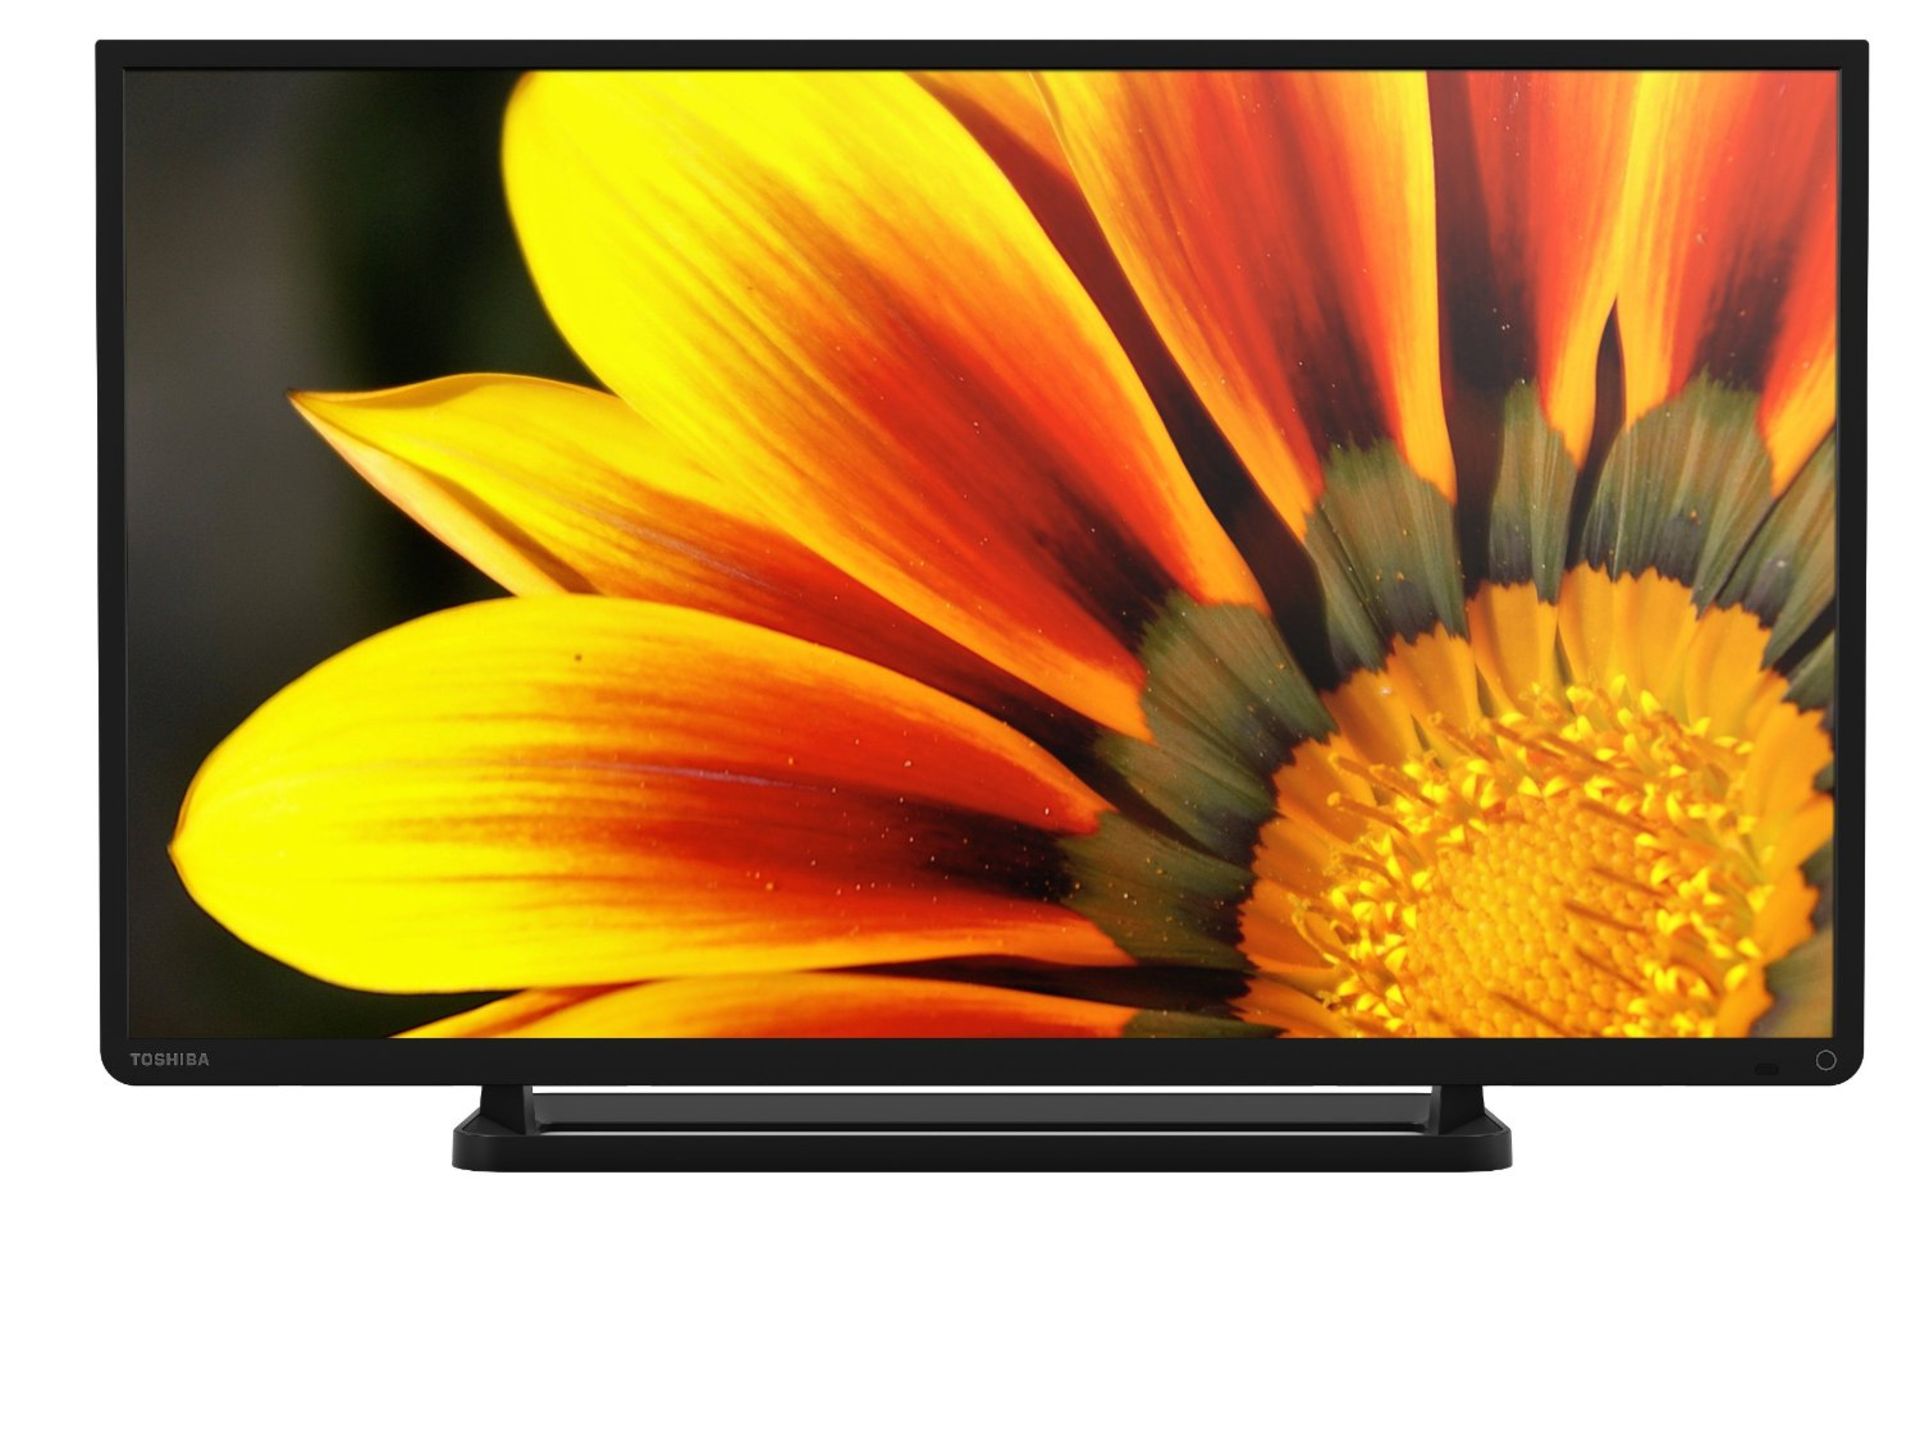 V Toshiba 40" Widescreen LED TV - Freeview - Full 1080p - 2 x HDMI - USB - AMR 200 - MHL